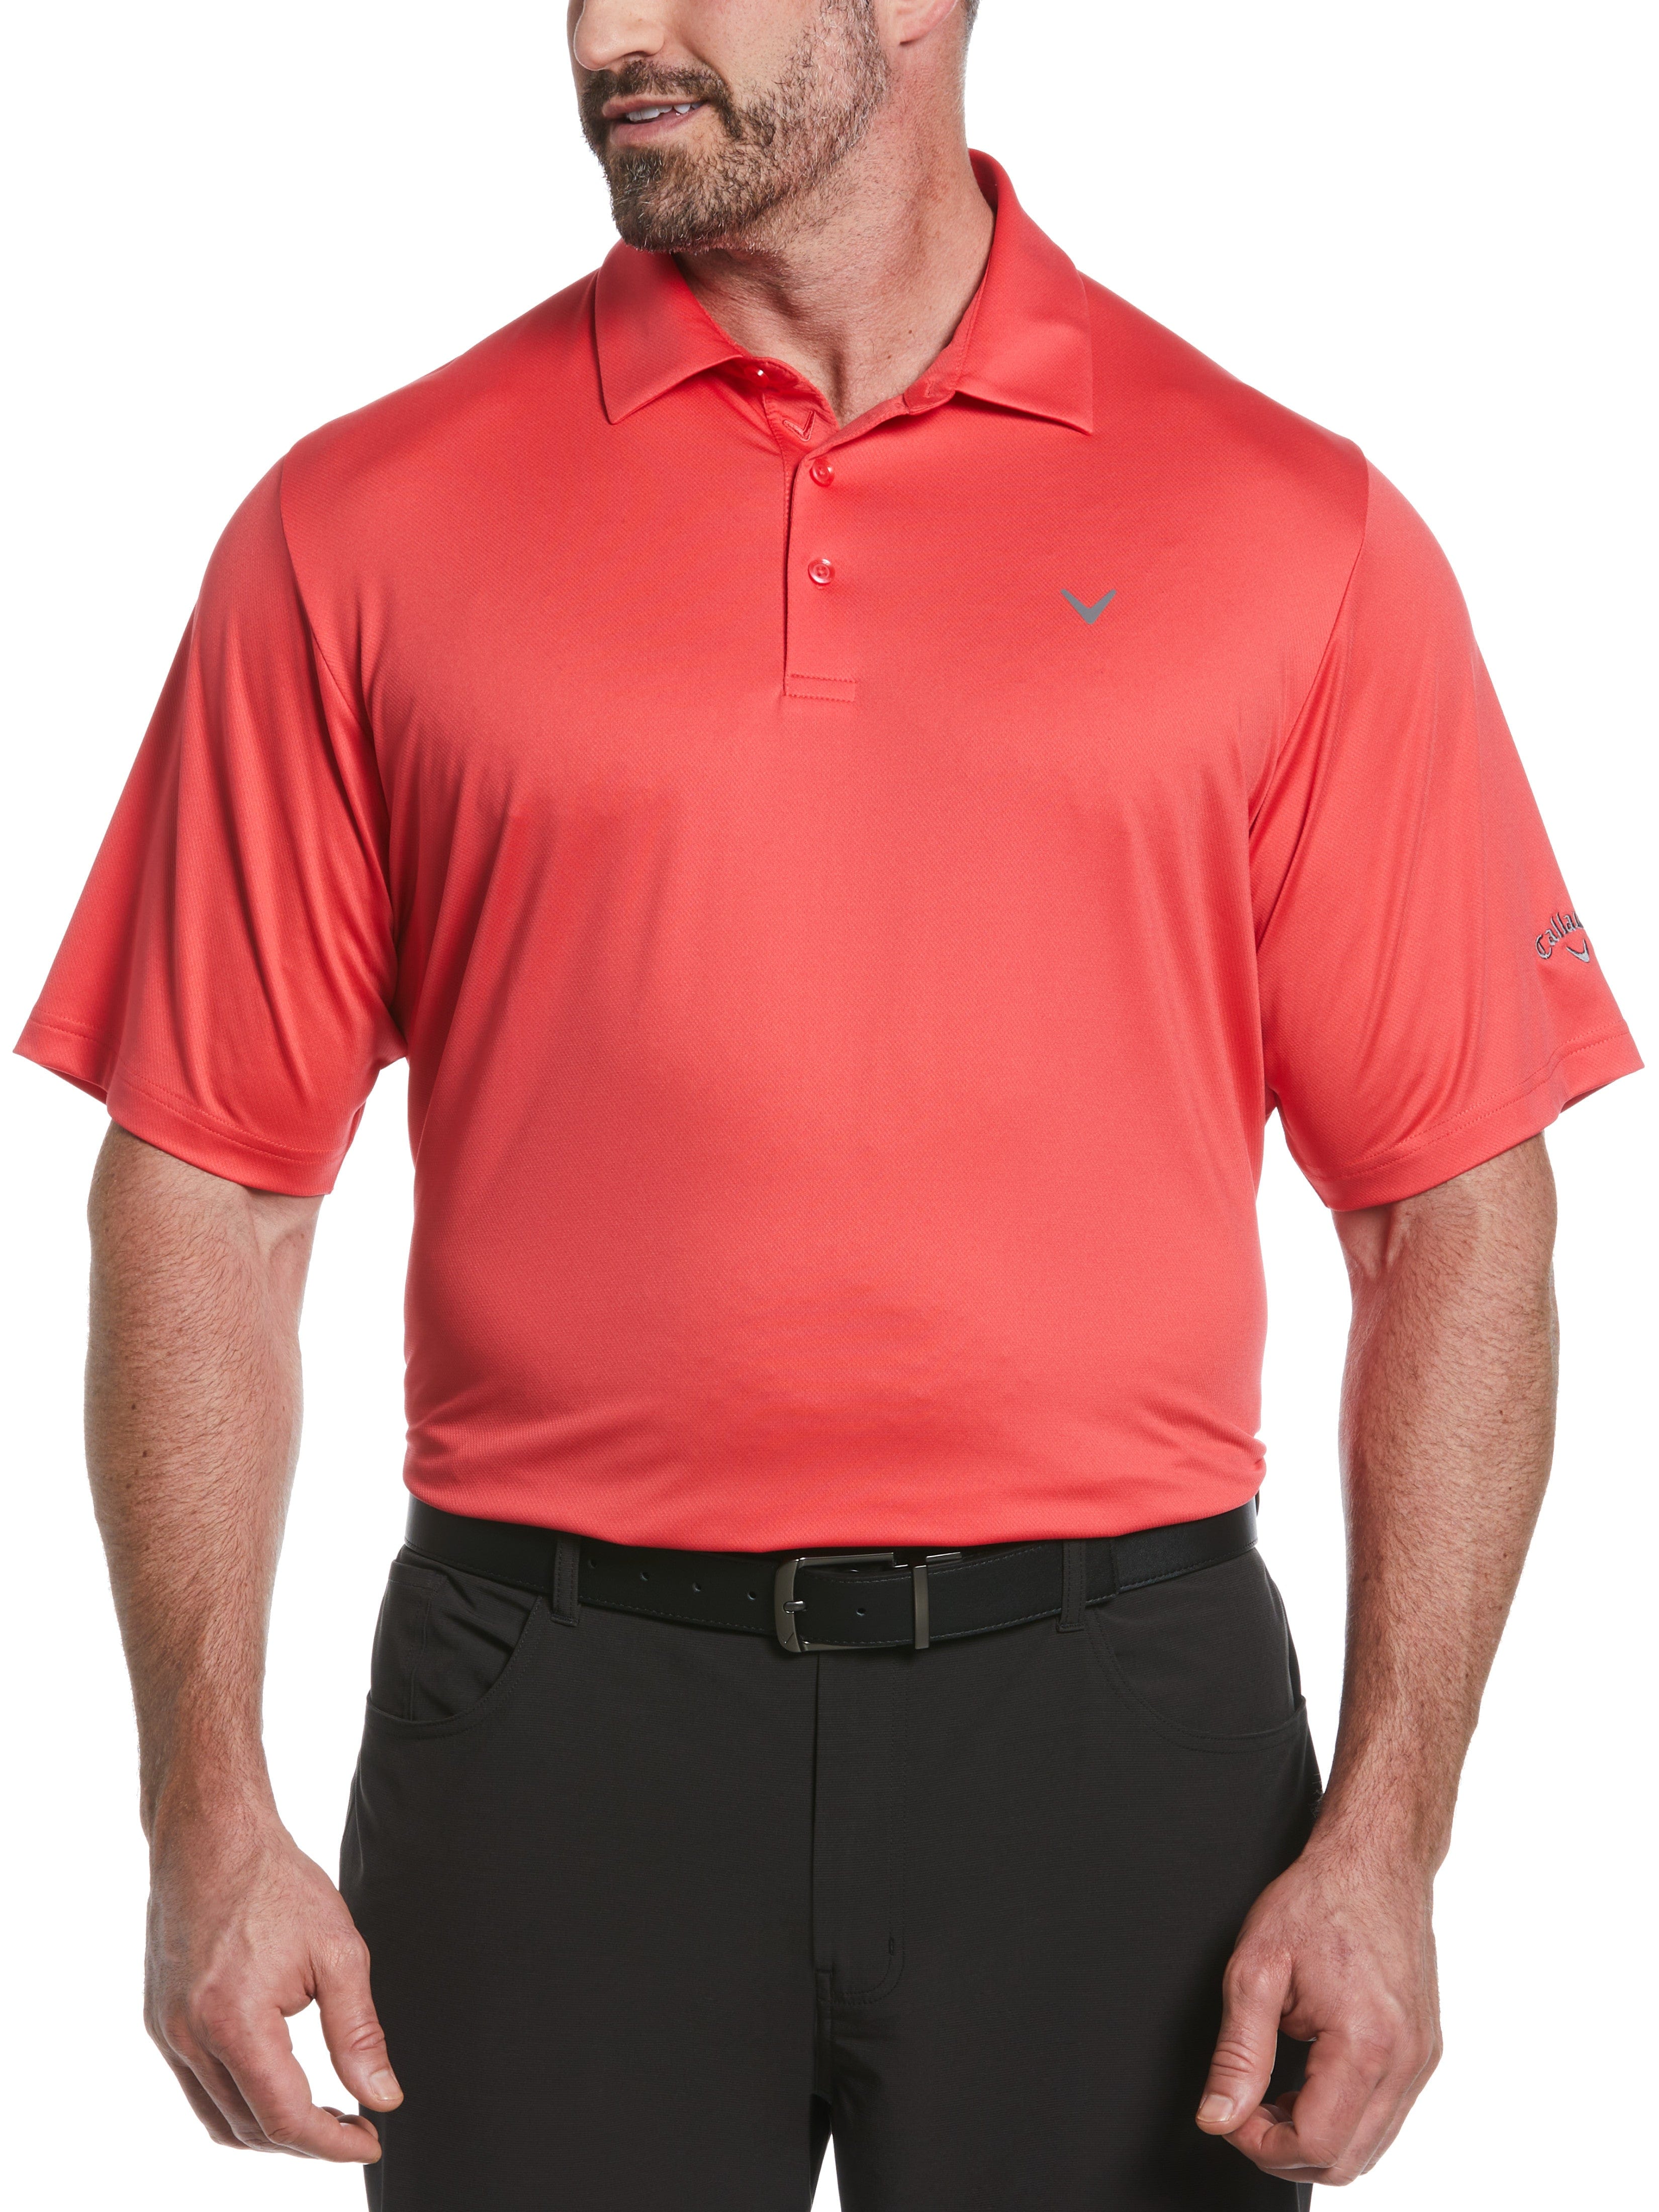 Callaway Apparel Mens Big & Tall Solid Swing Tech Golf Polo Shirt, Size LT, Teaberry Pink, Polyester/Elastane | Golf Apparel Shop